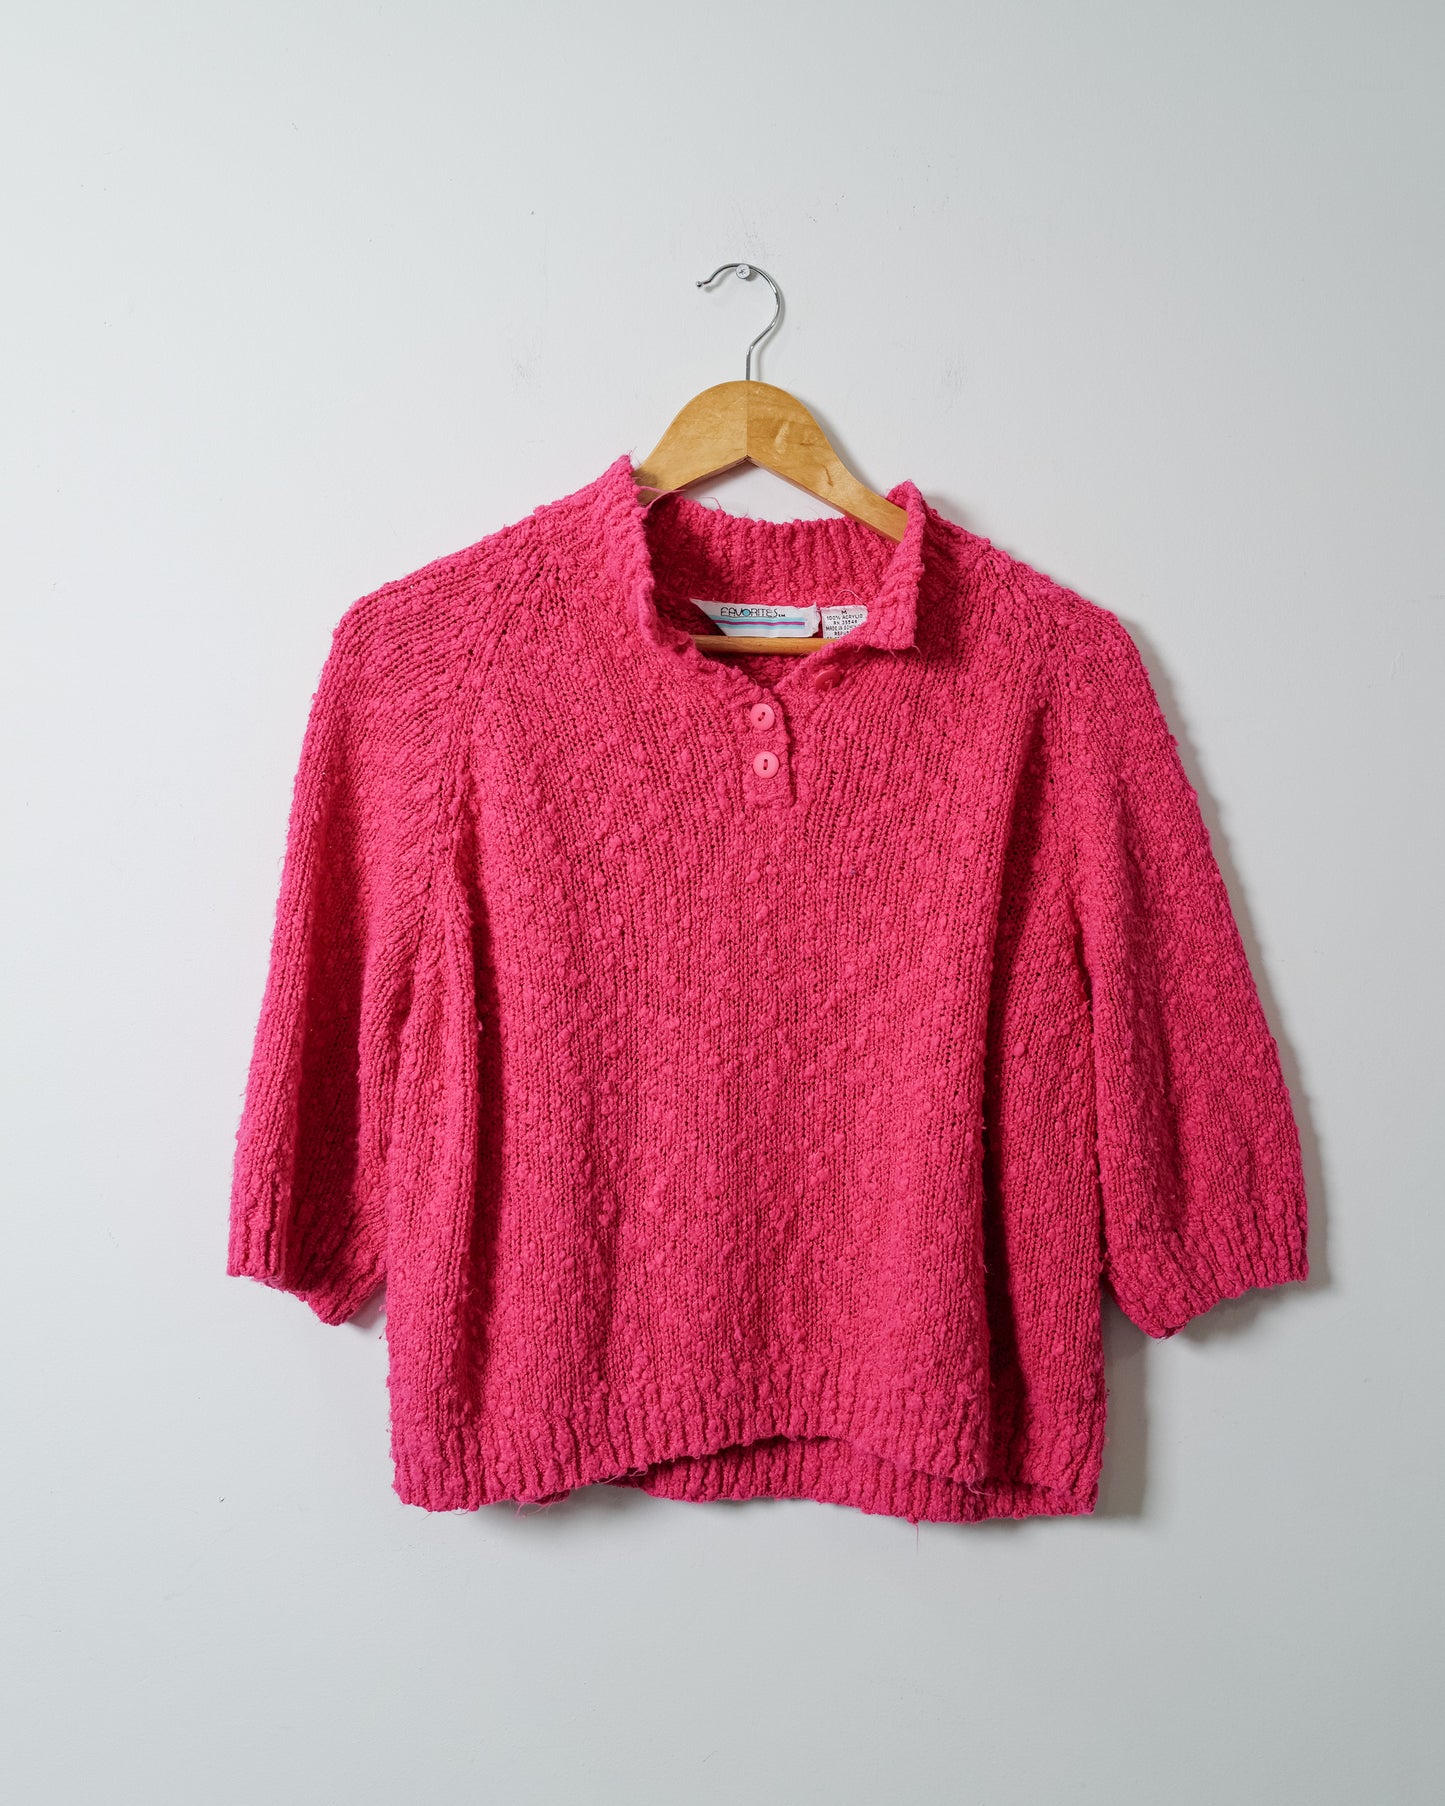 Vintage Boucle Sweater - Size Medium